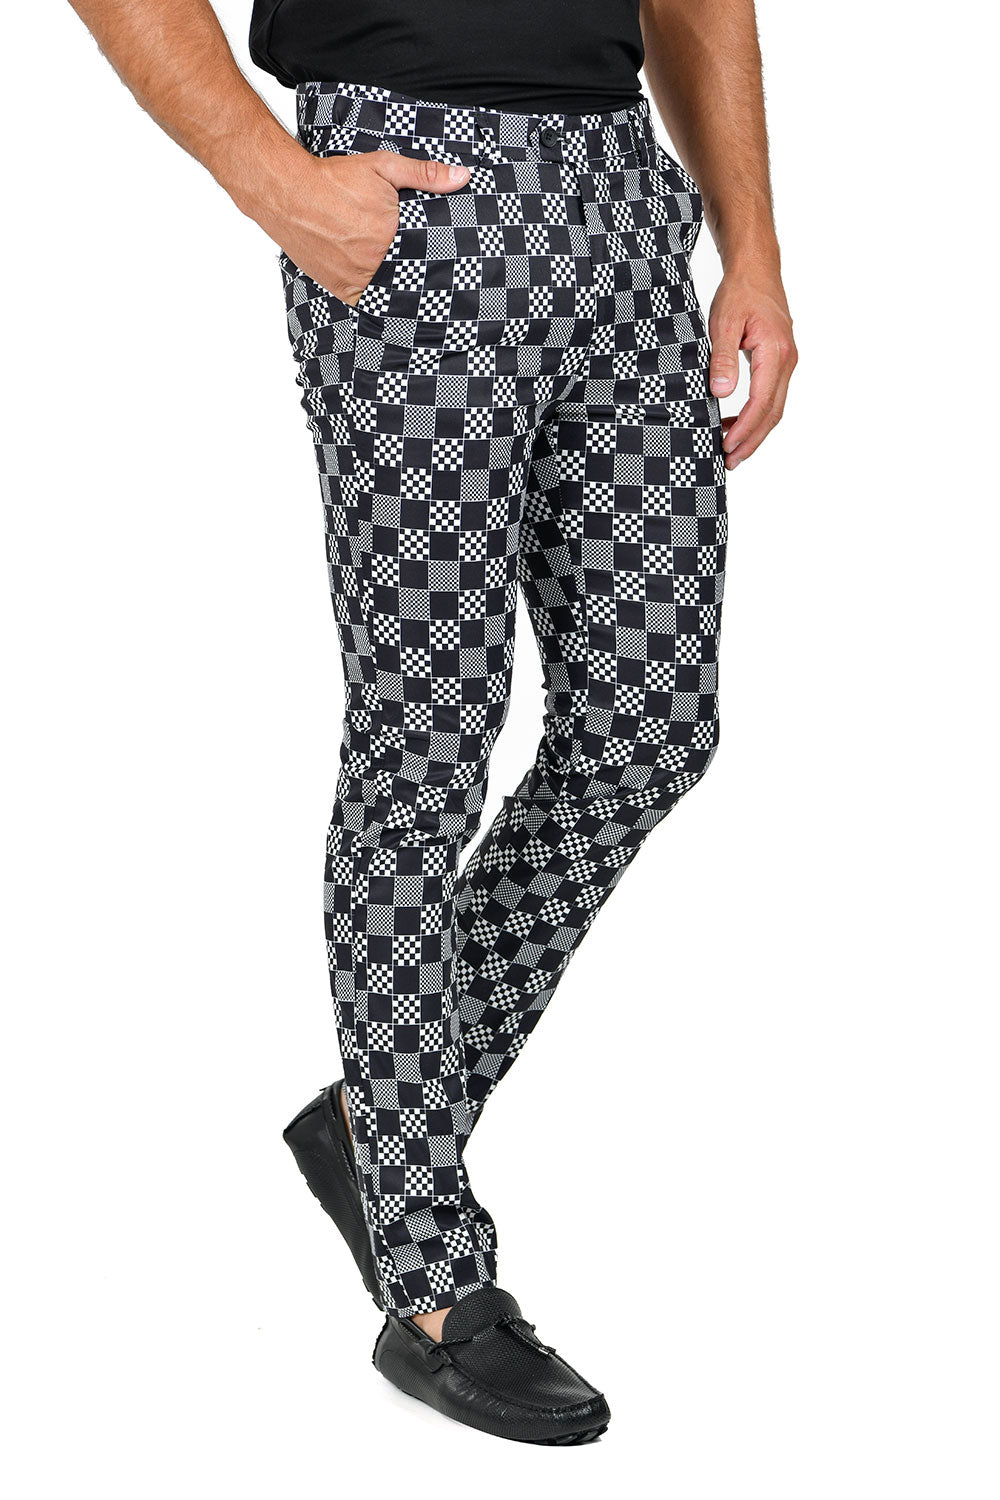 BARABAS Men's Checkered Plaid Black White Chino Pants CP110